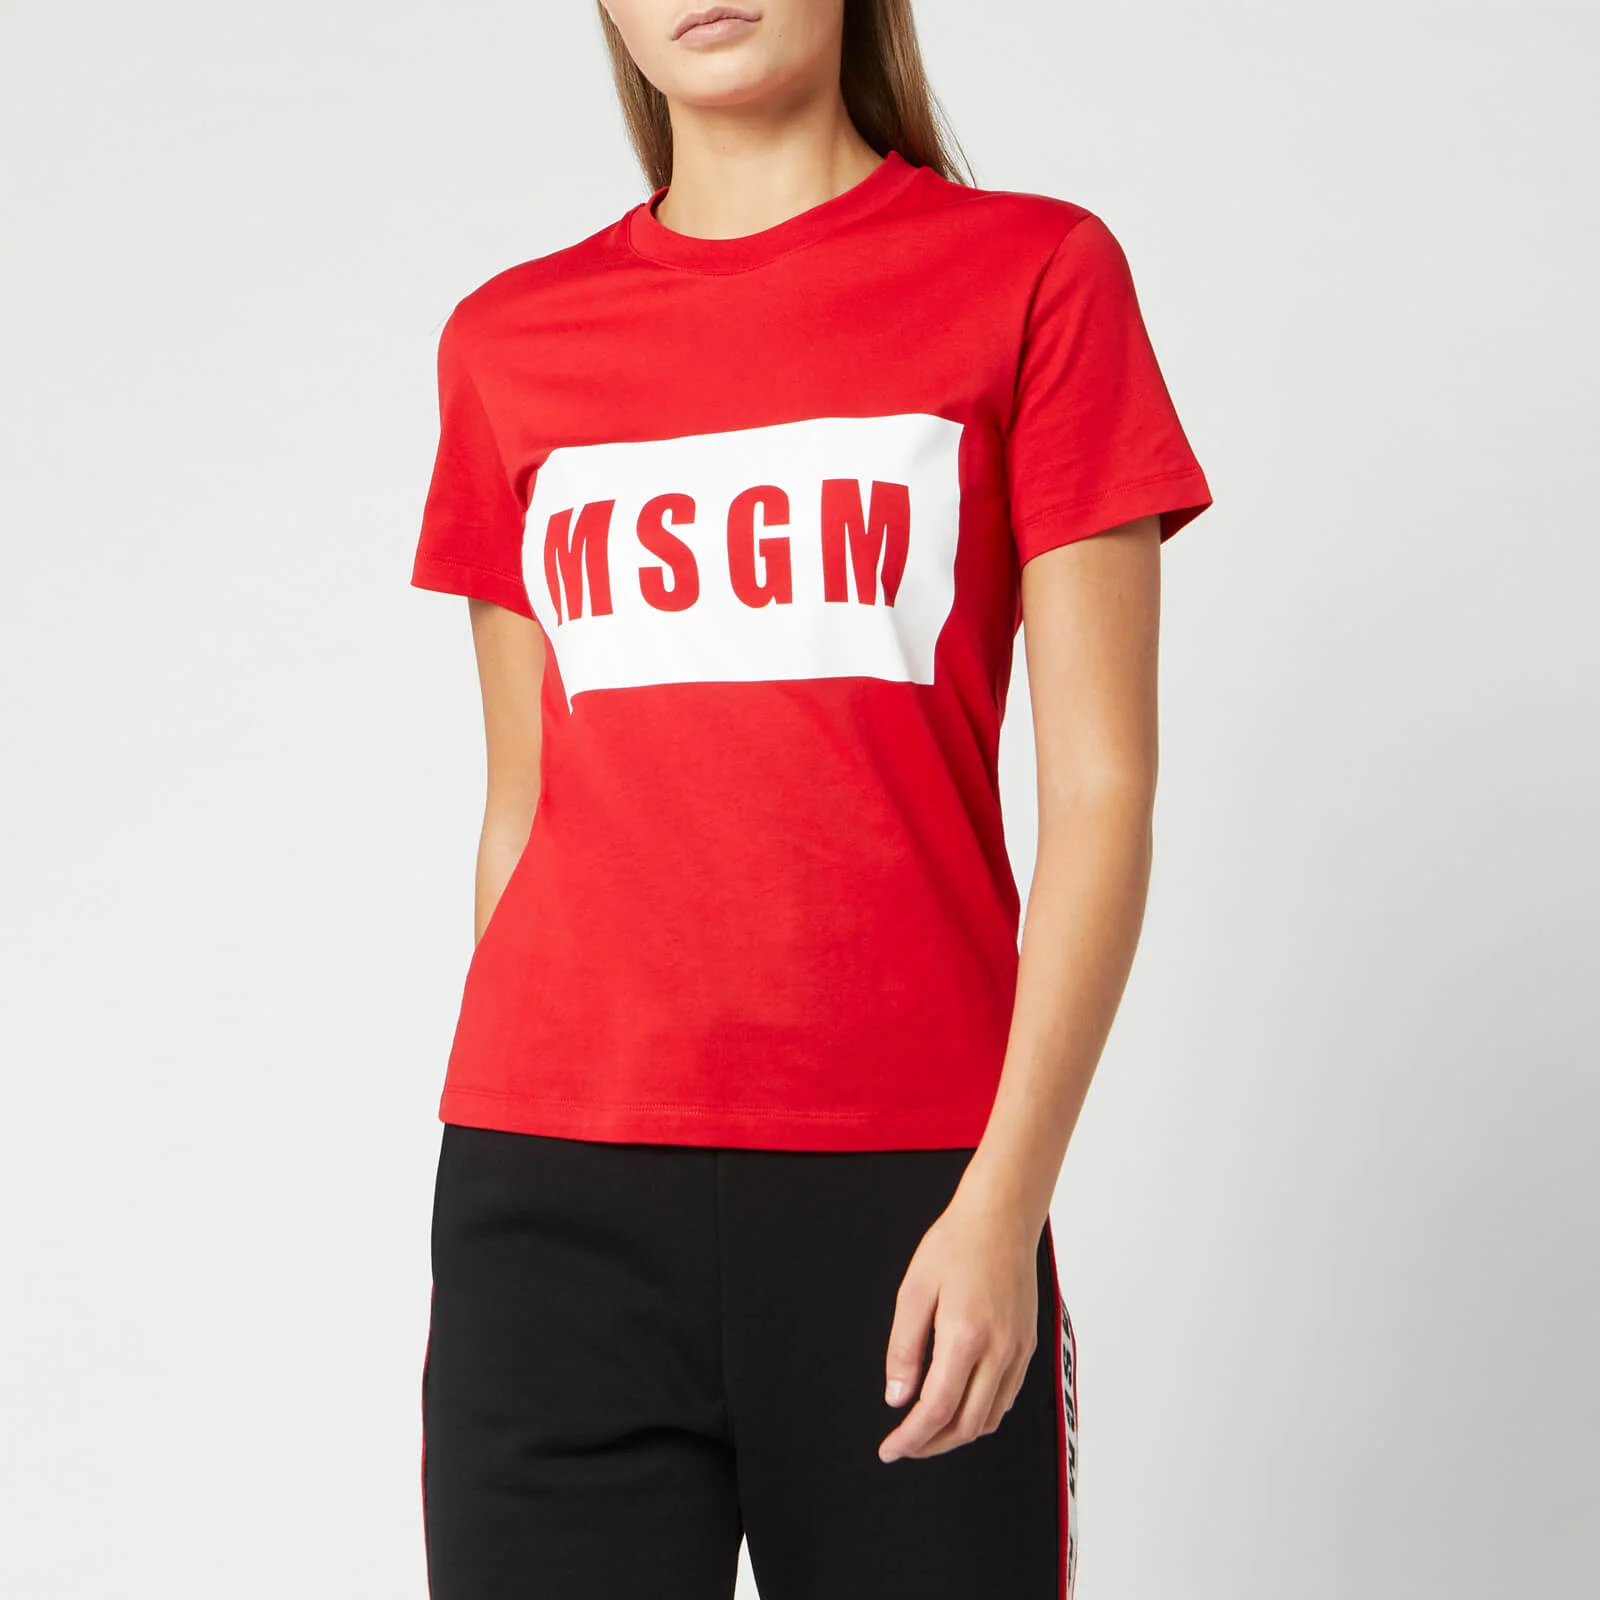 MSGM Women's Logo T-Shirt - Red Image 1